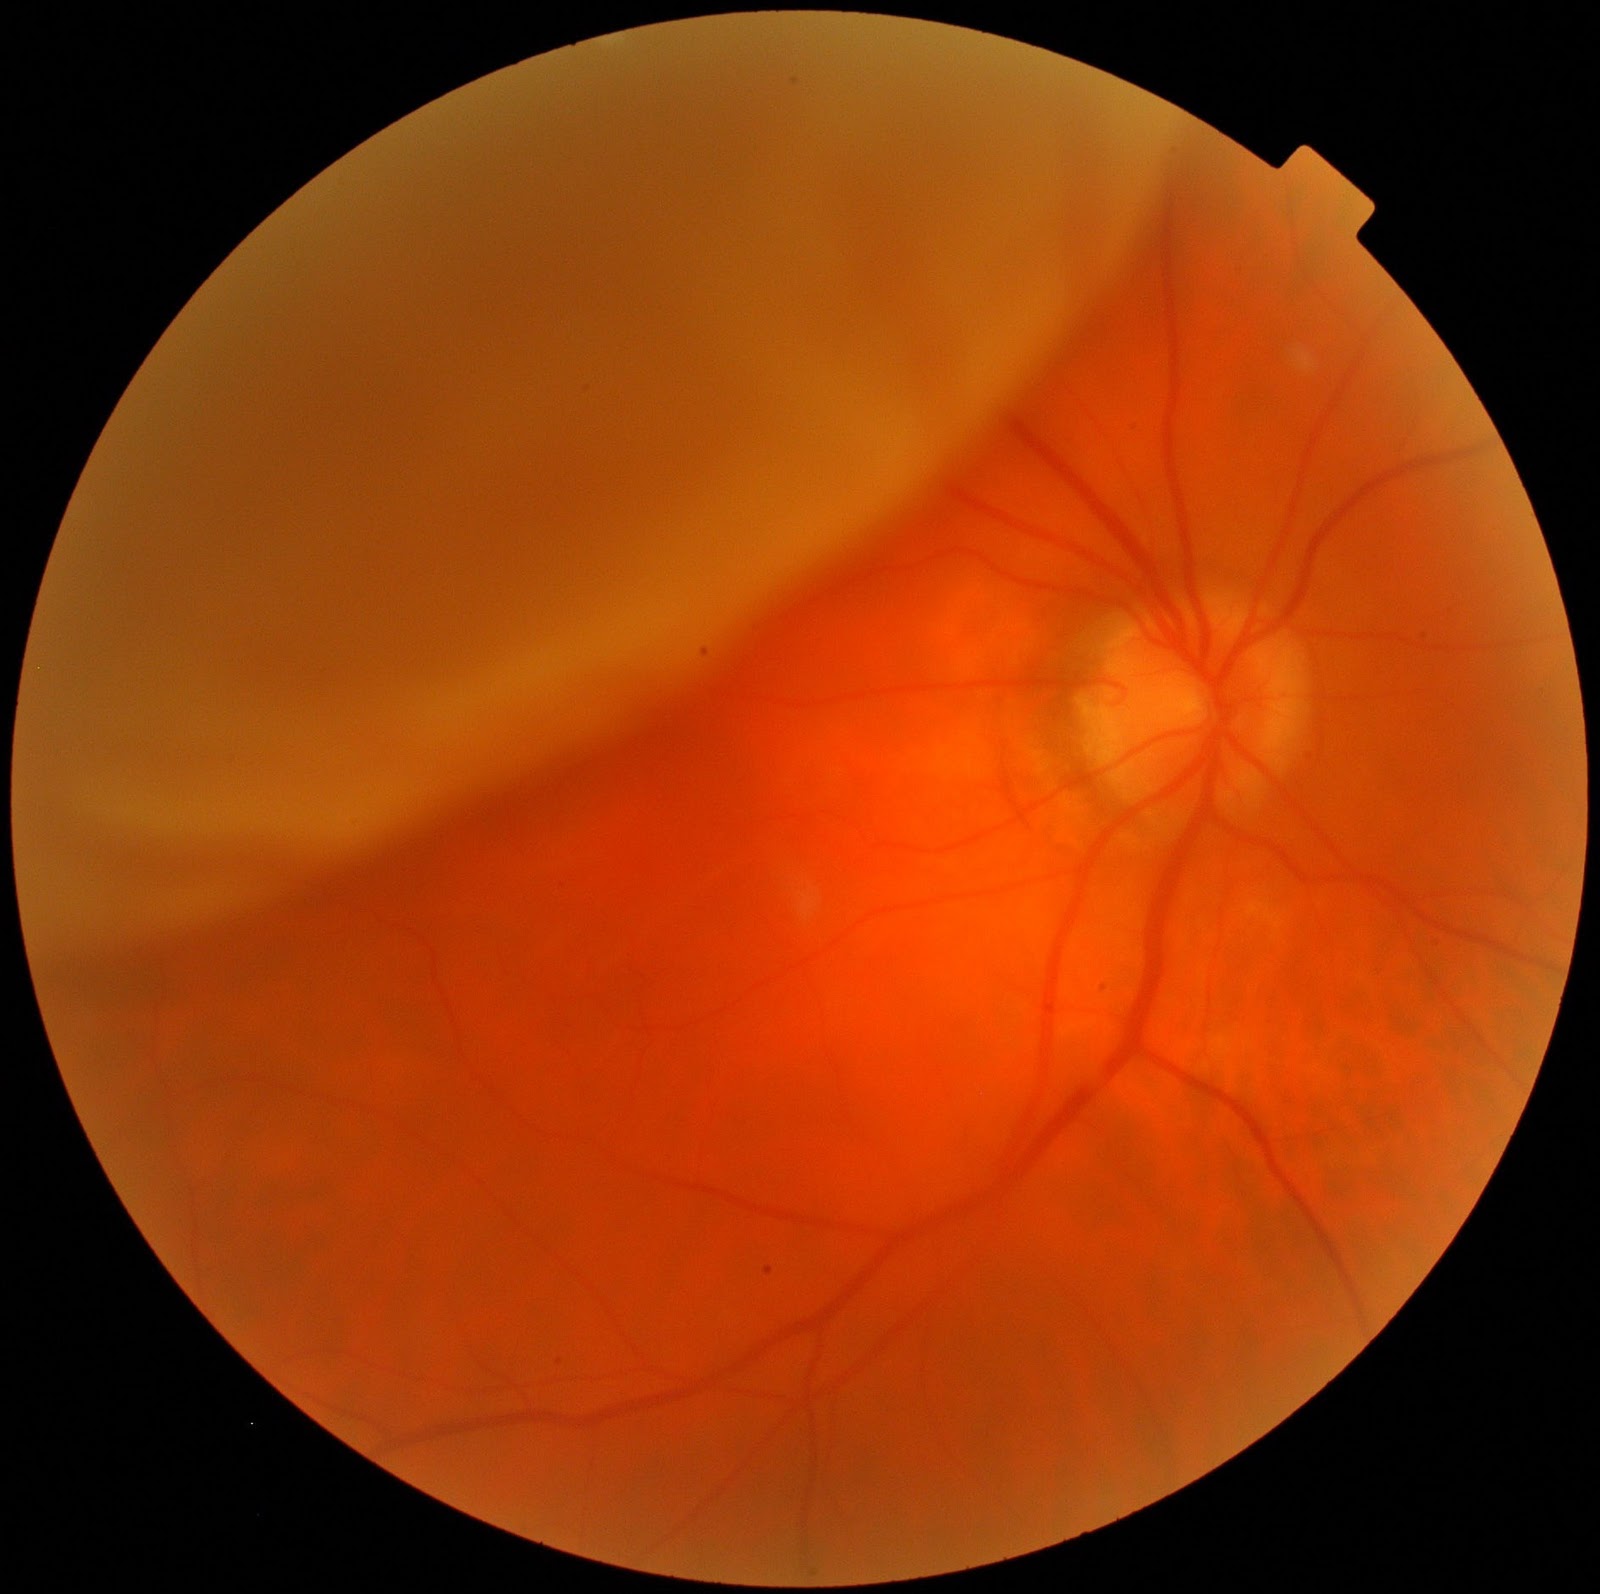 Retinal detachment seen on a fundus photograph